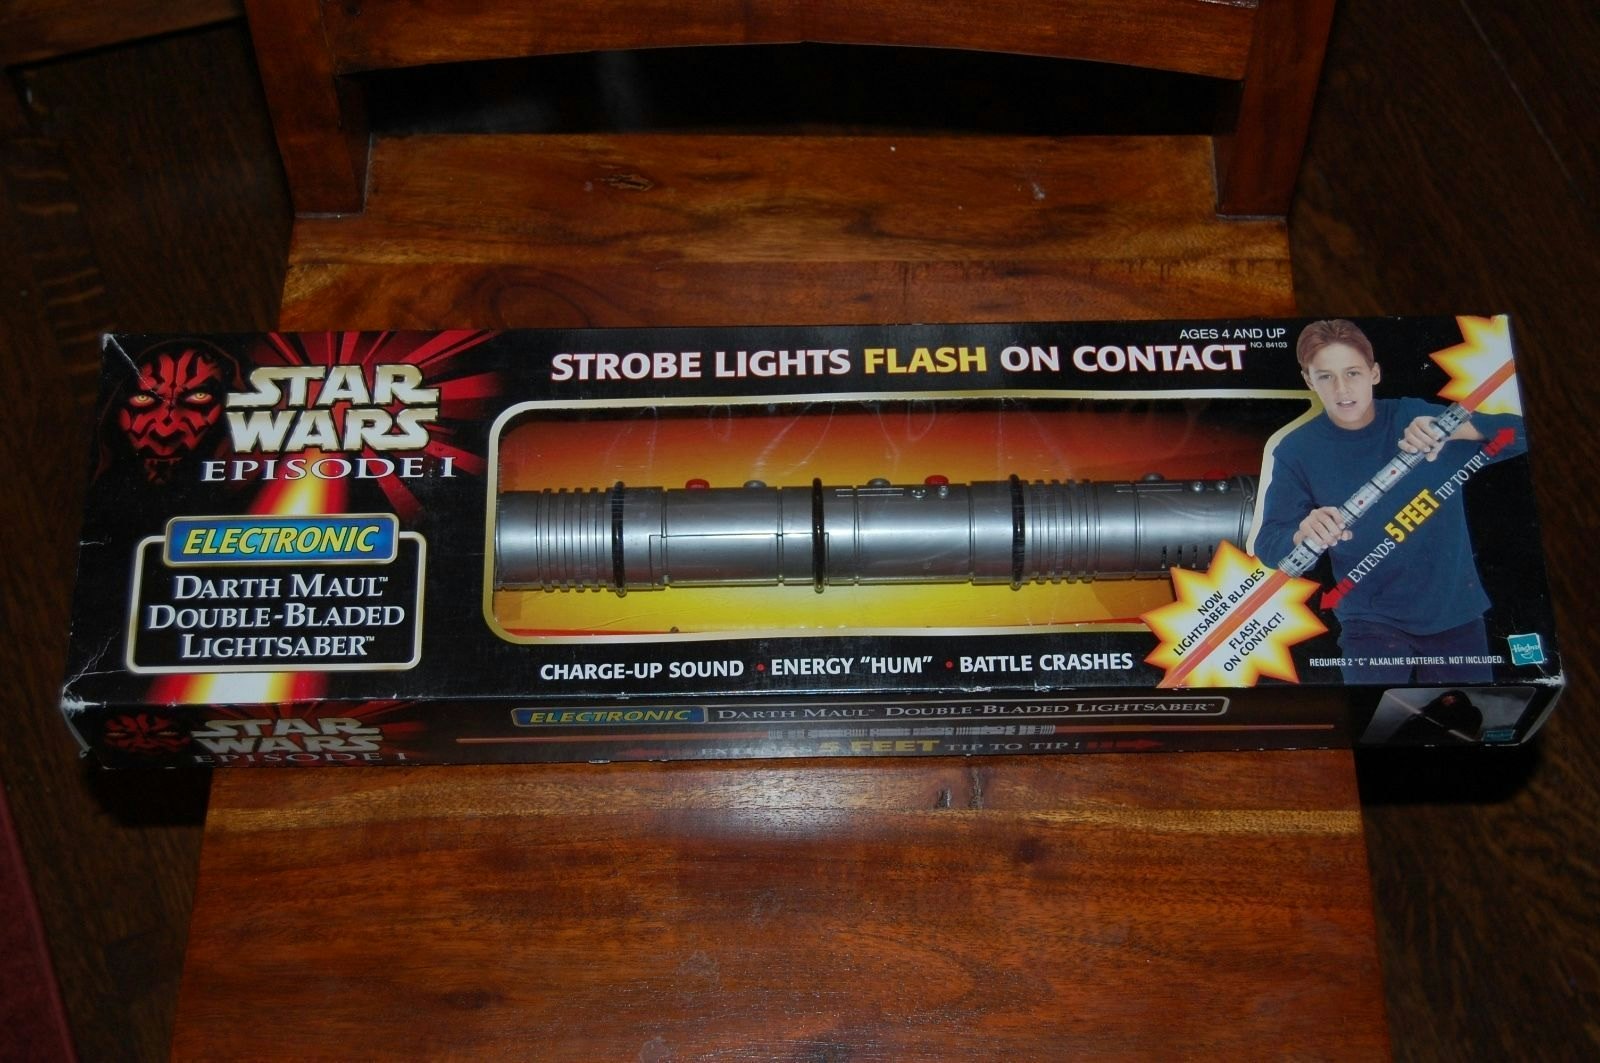 1970s lightsaber toy